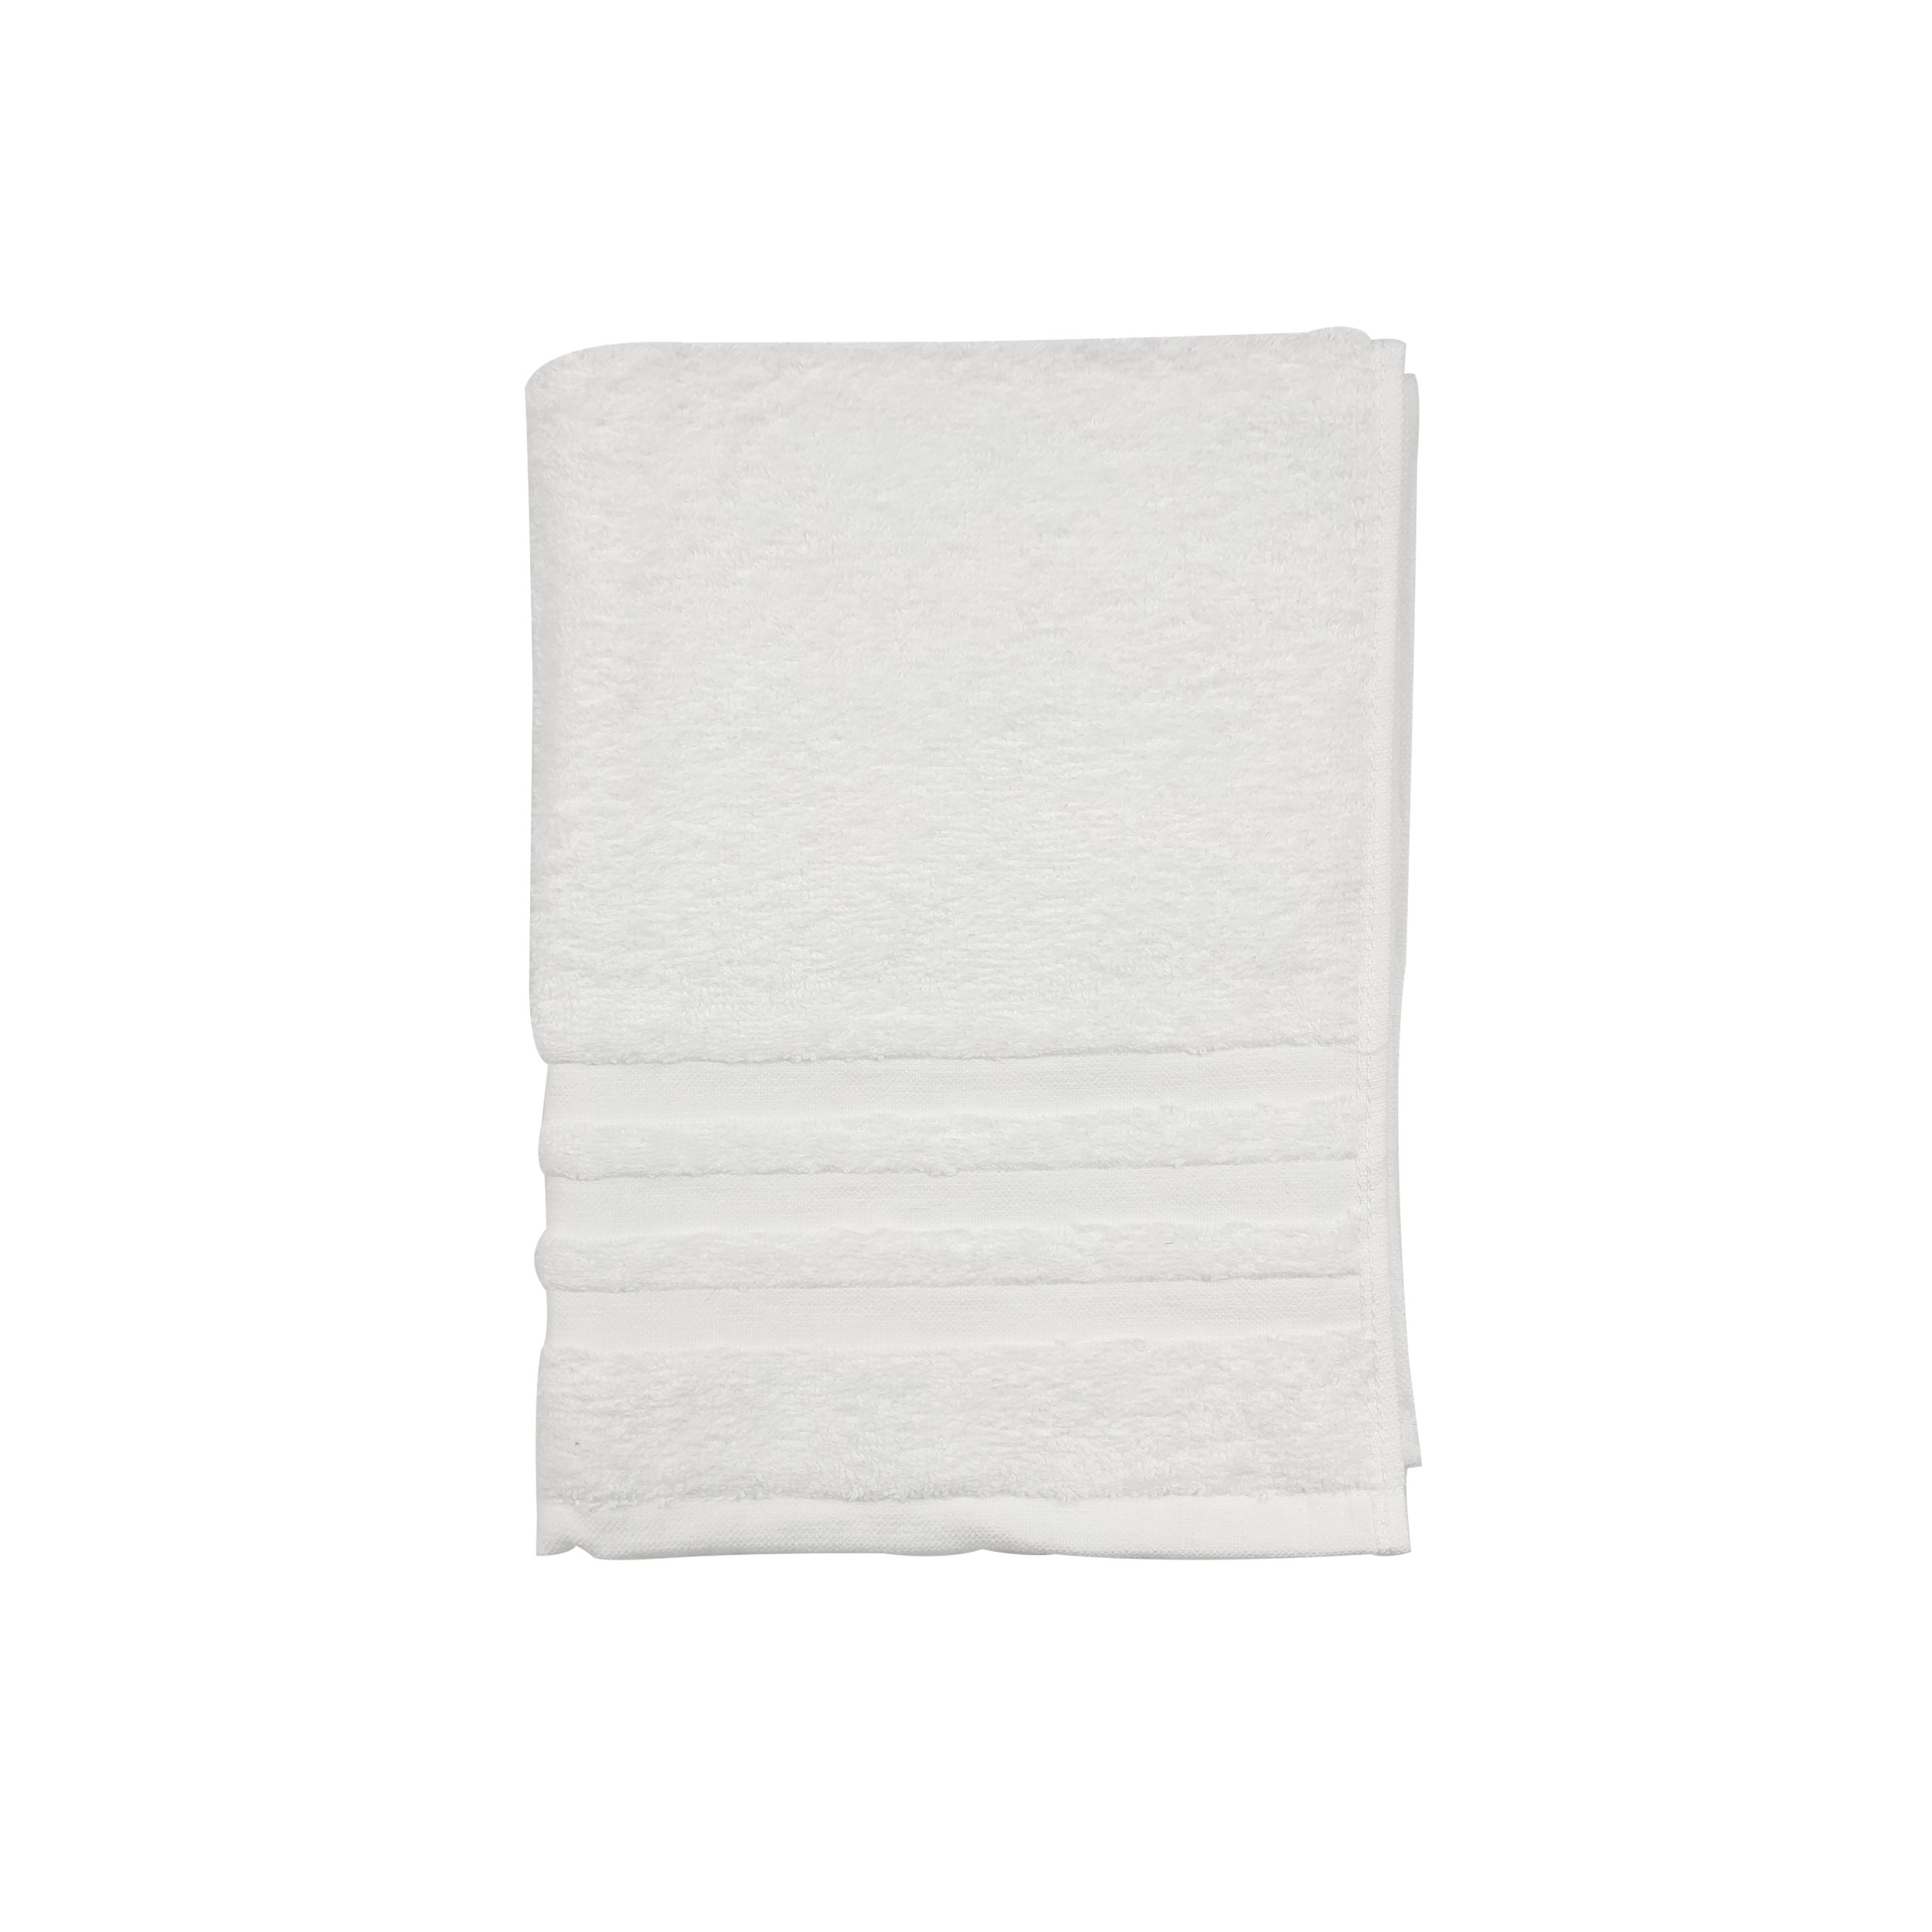 panini-tessuti-asciugamano-bianco-piccolo